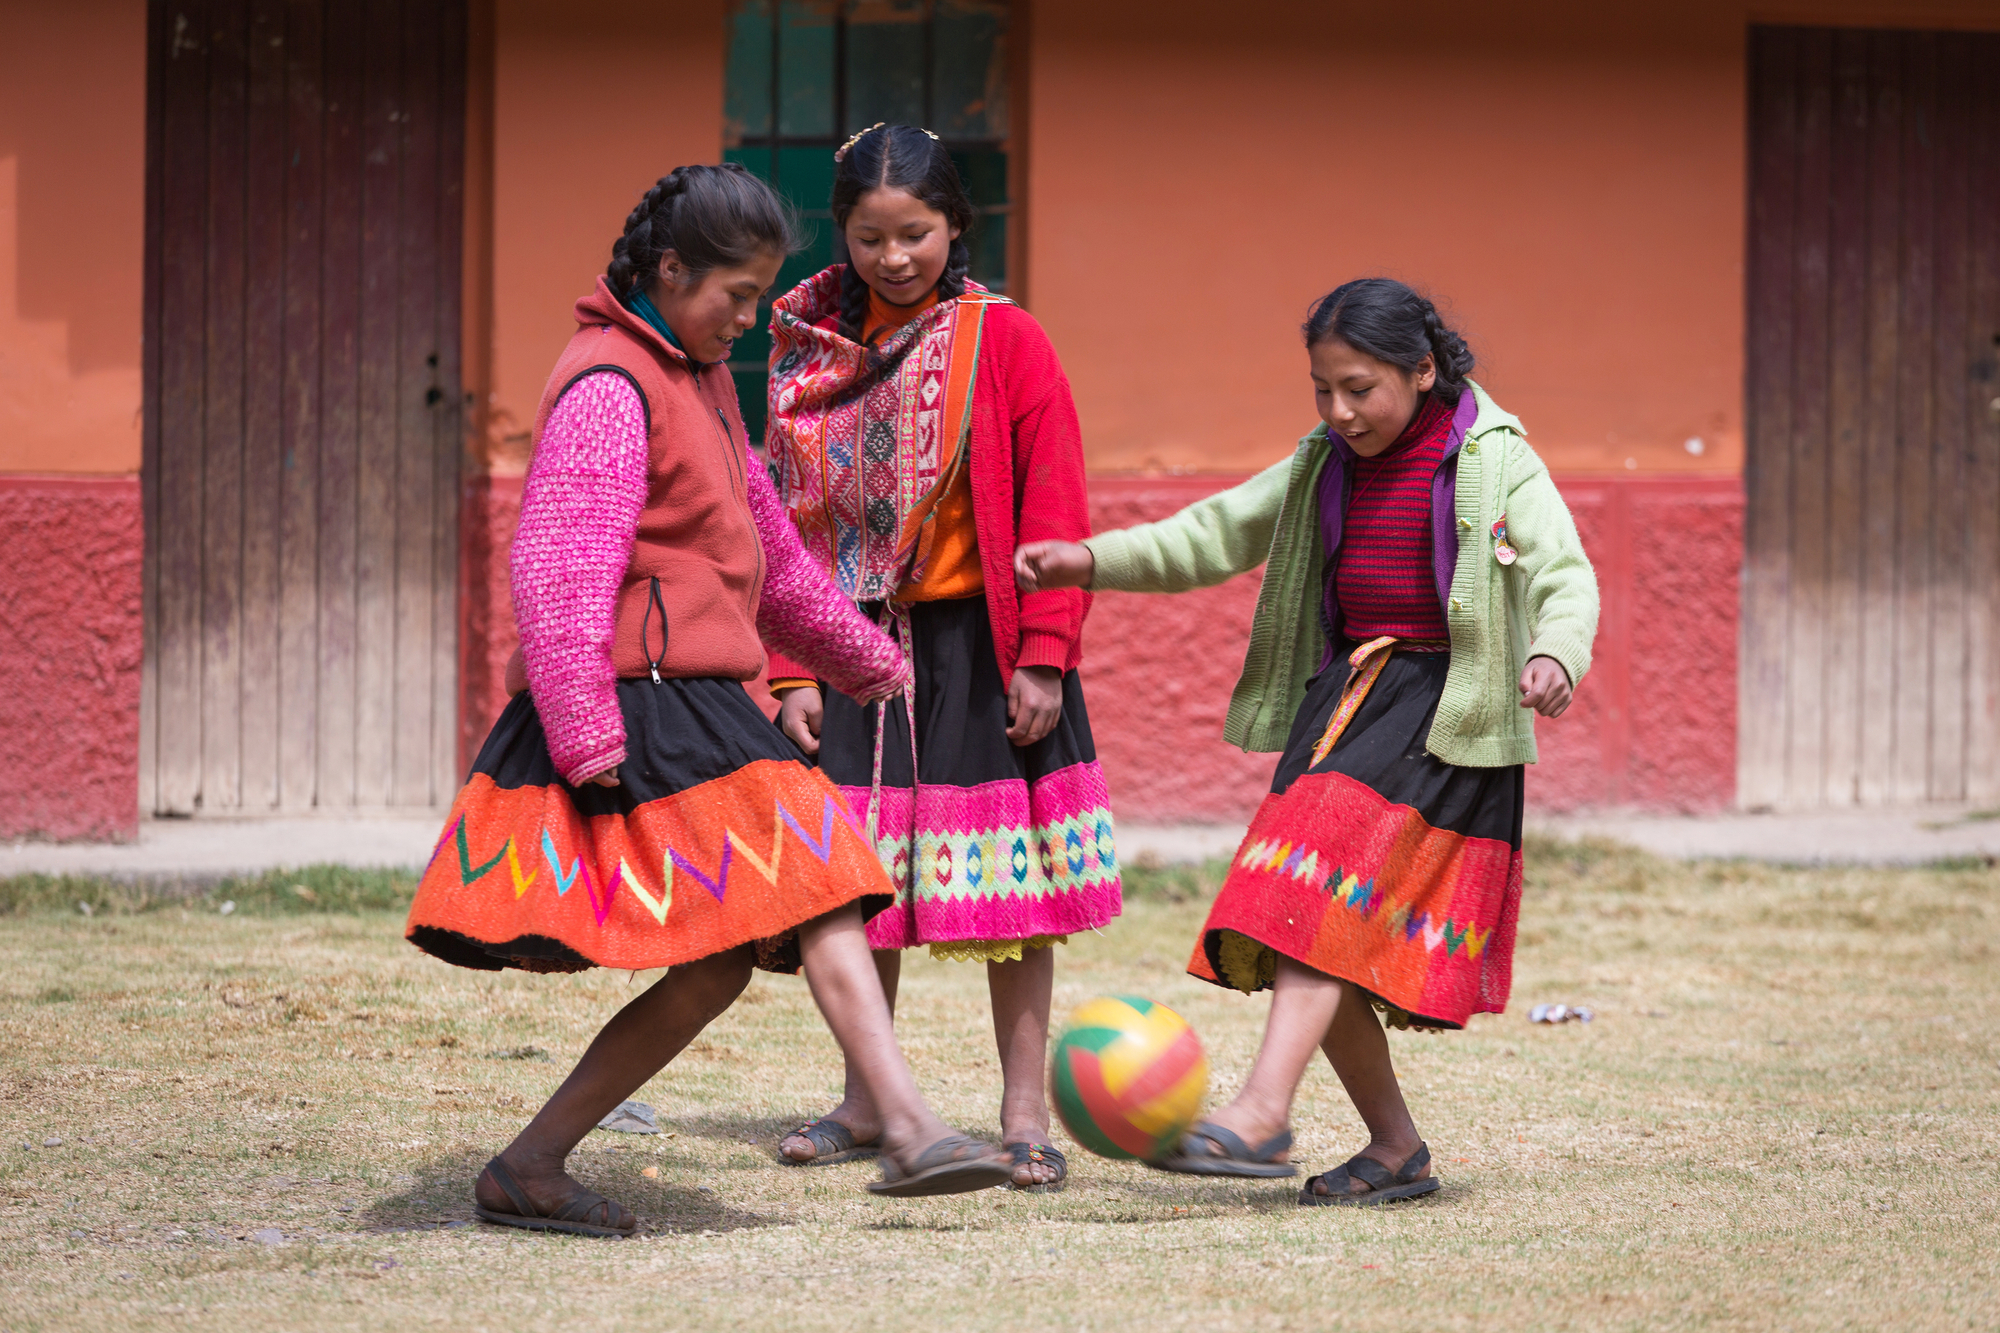  happy girls playing soccer